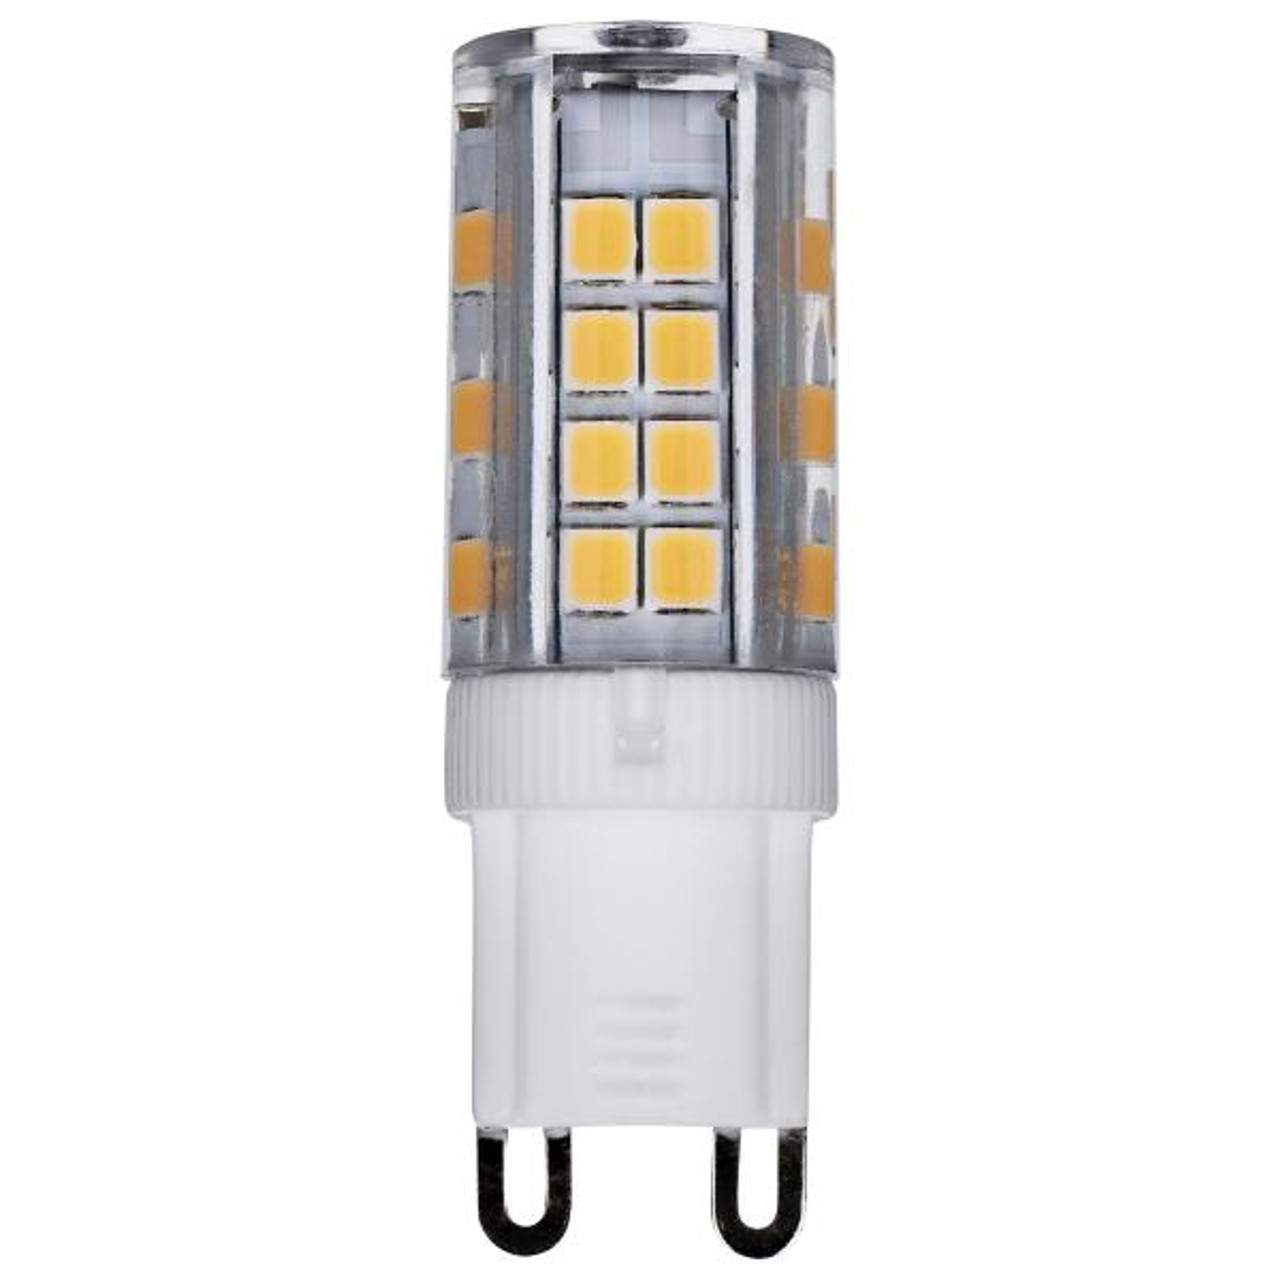 LED lamps with retrofit pin base G9